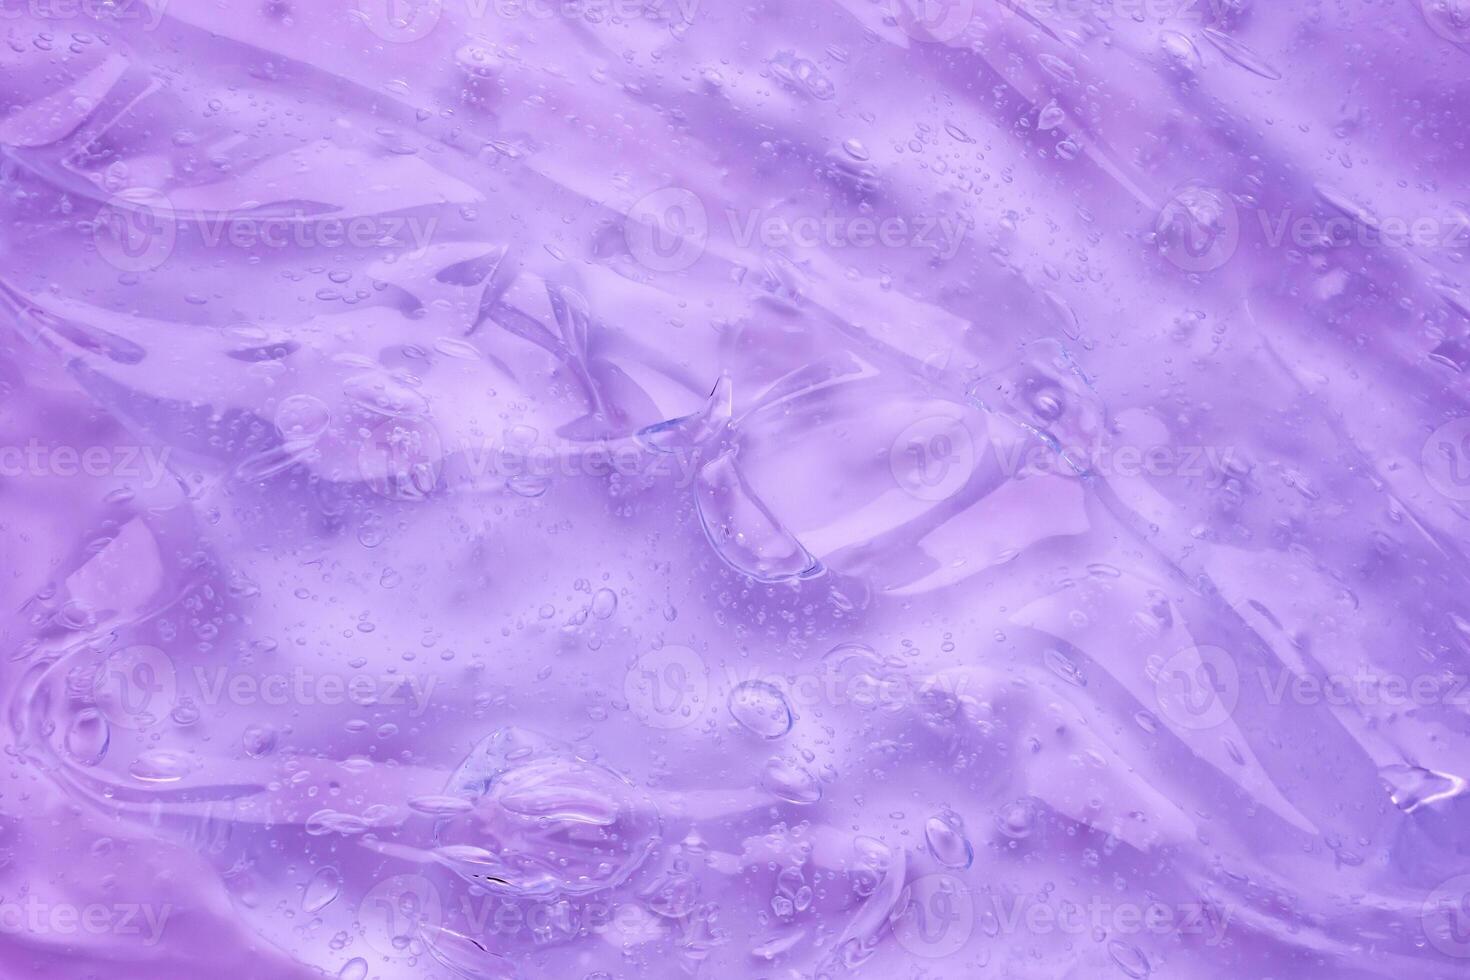 trasparente chiaro viola liquido siero gel cosmetico struttura sfondo foto